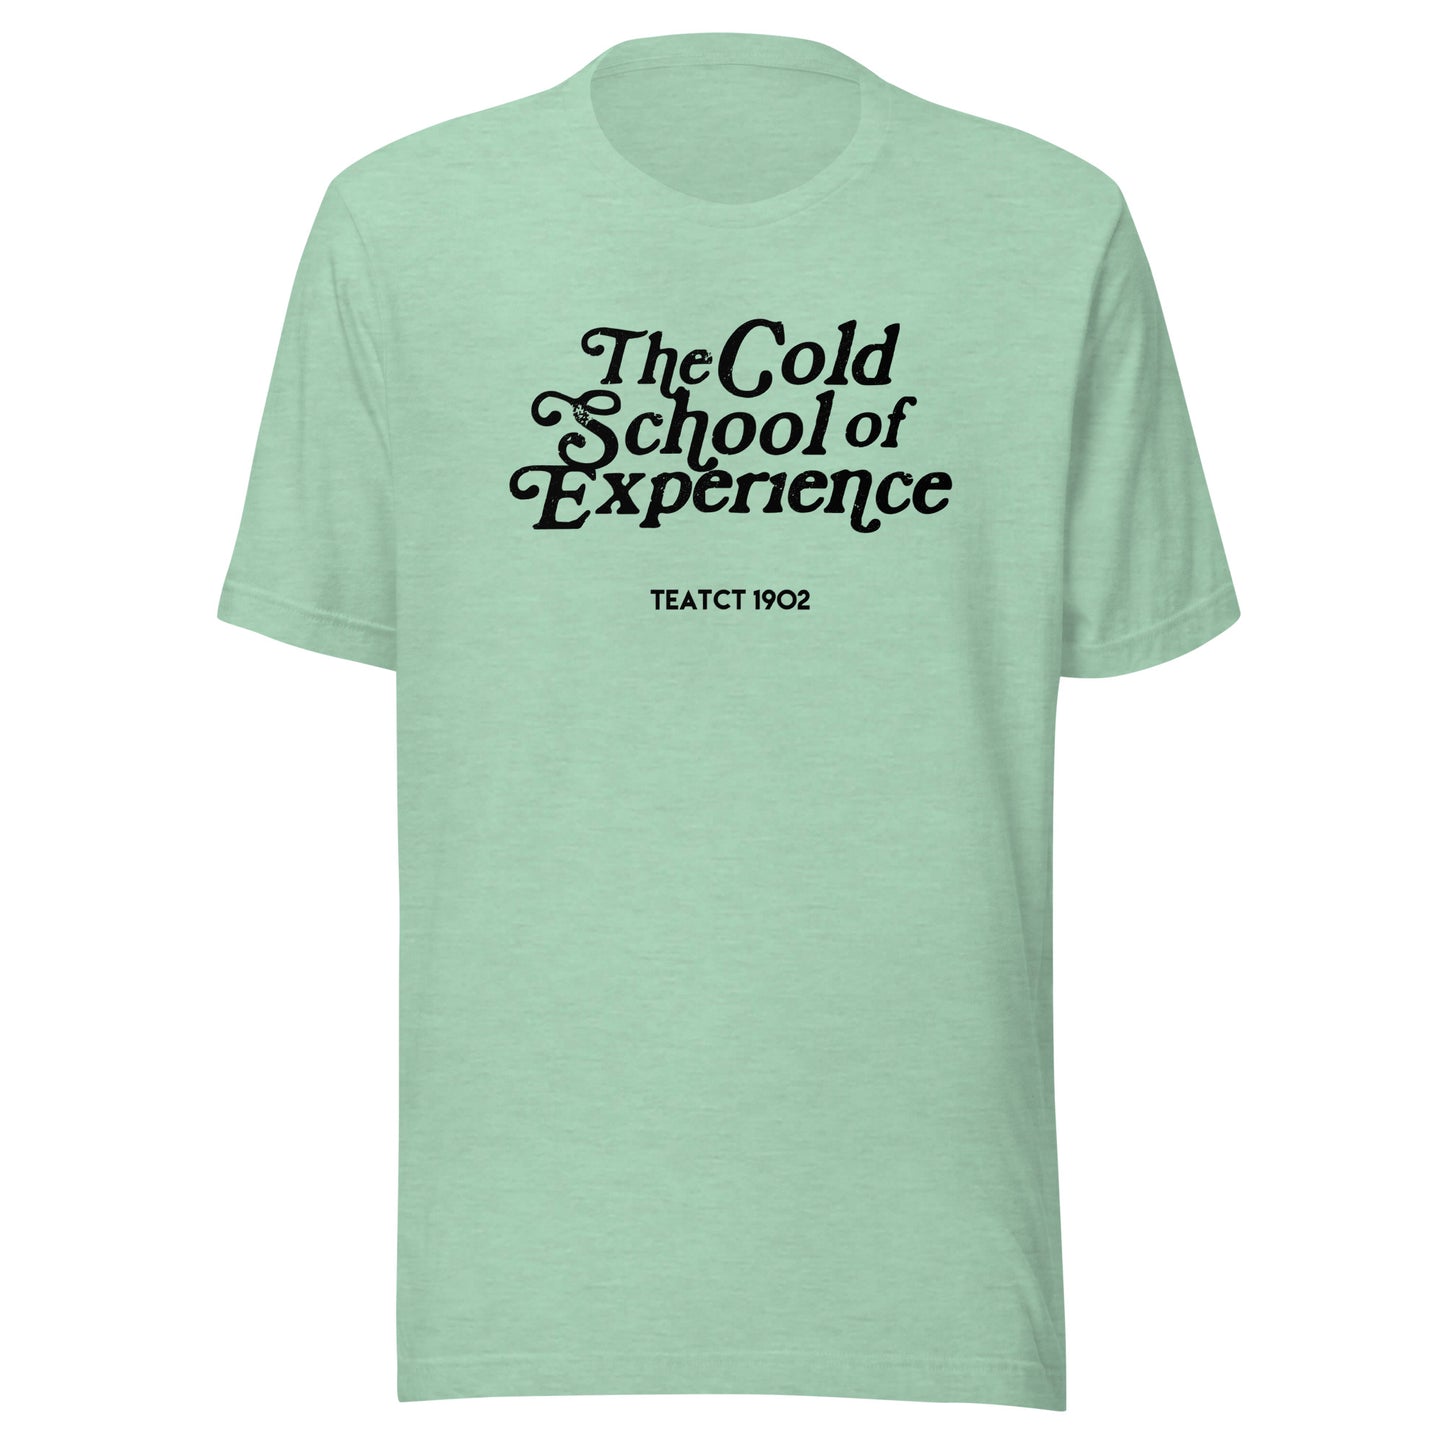 The COLD SCHOOL T-Shirt ( White Print )